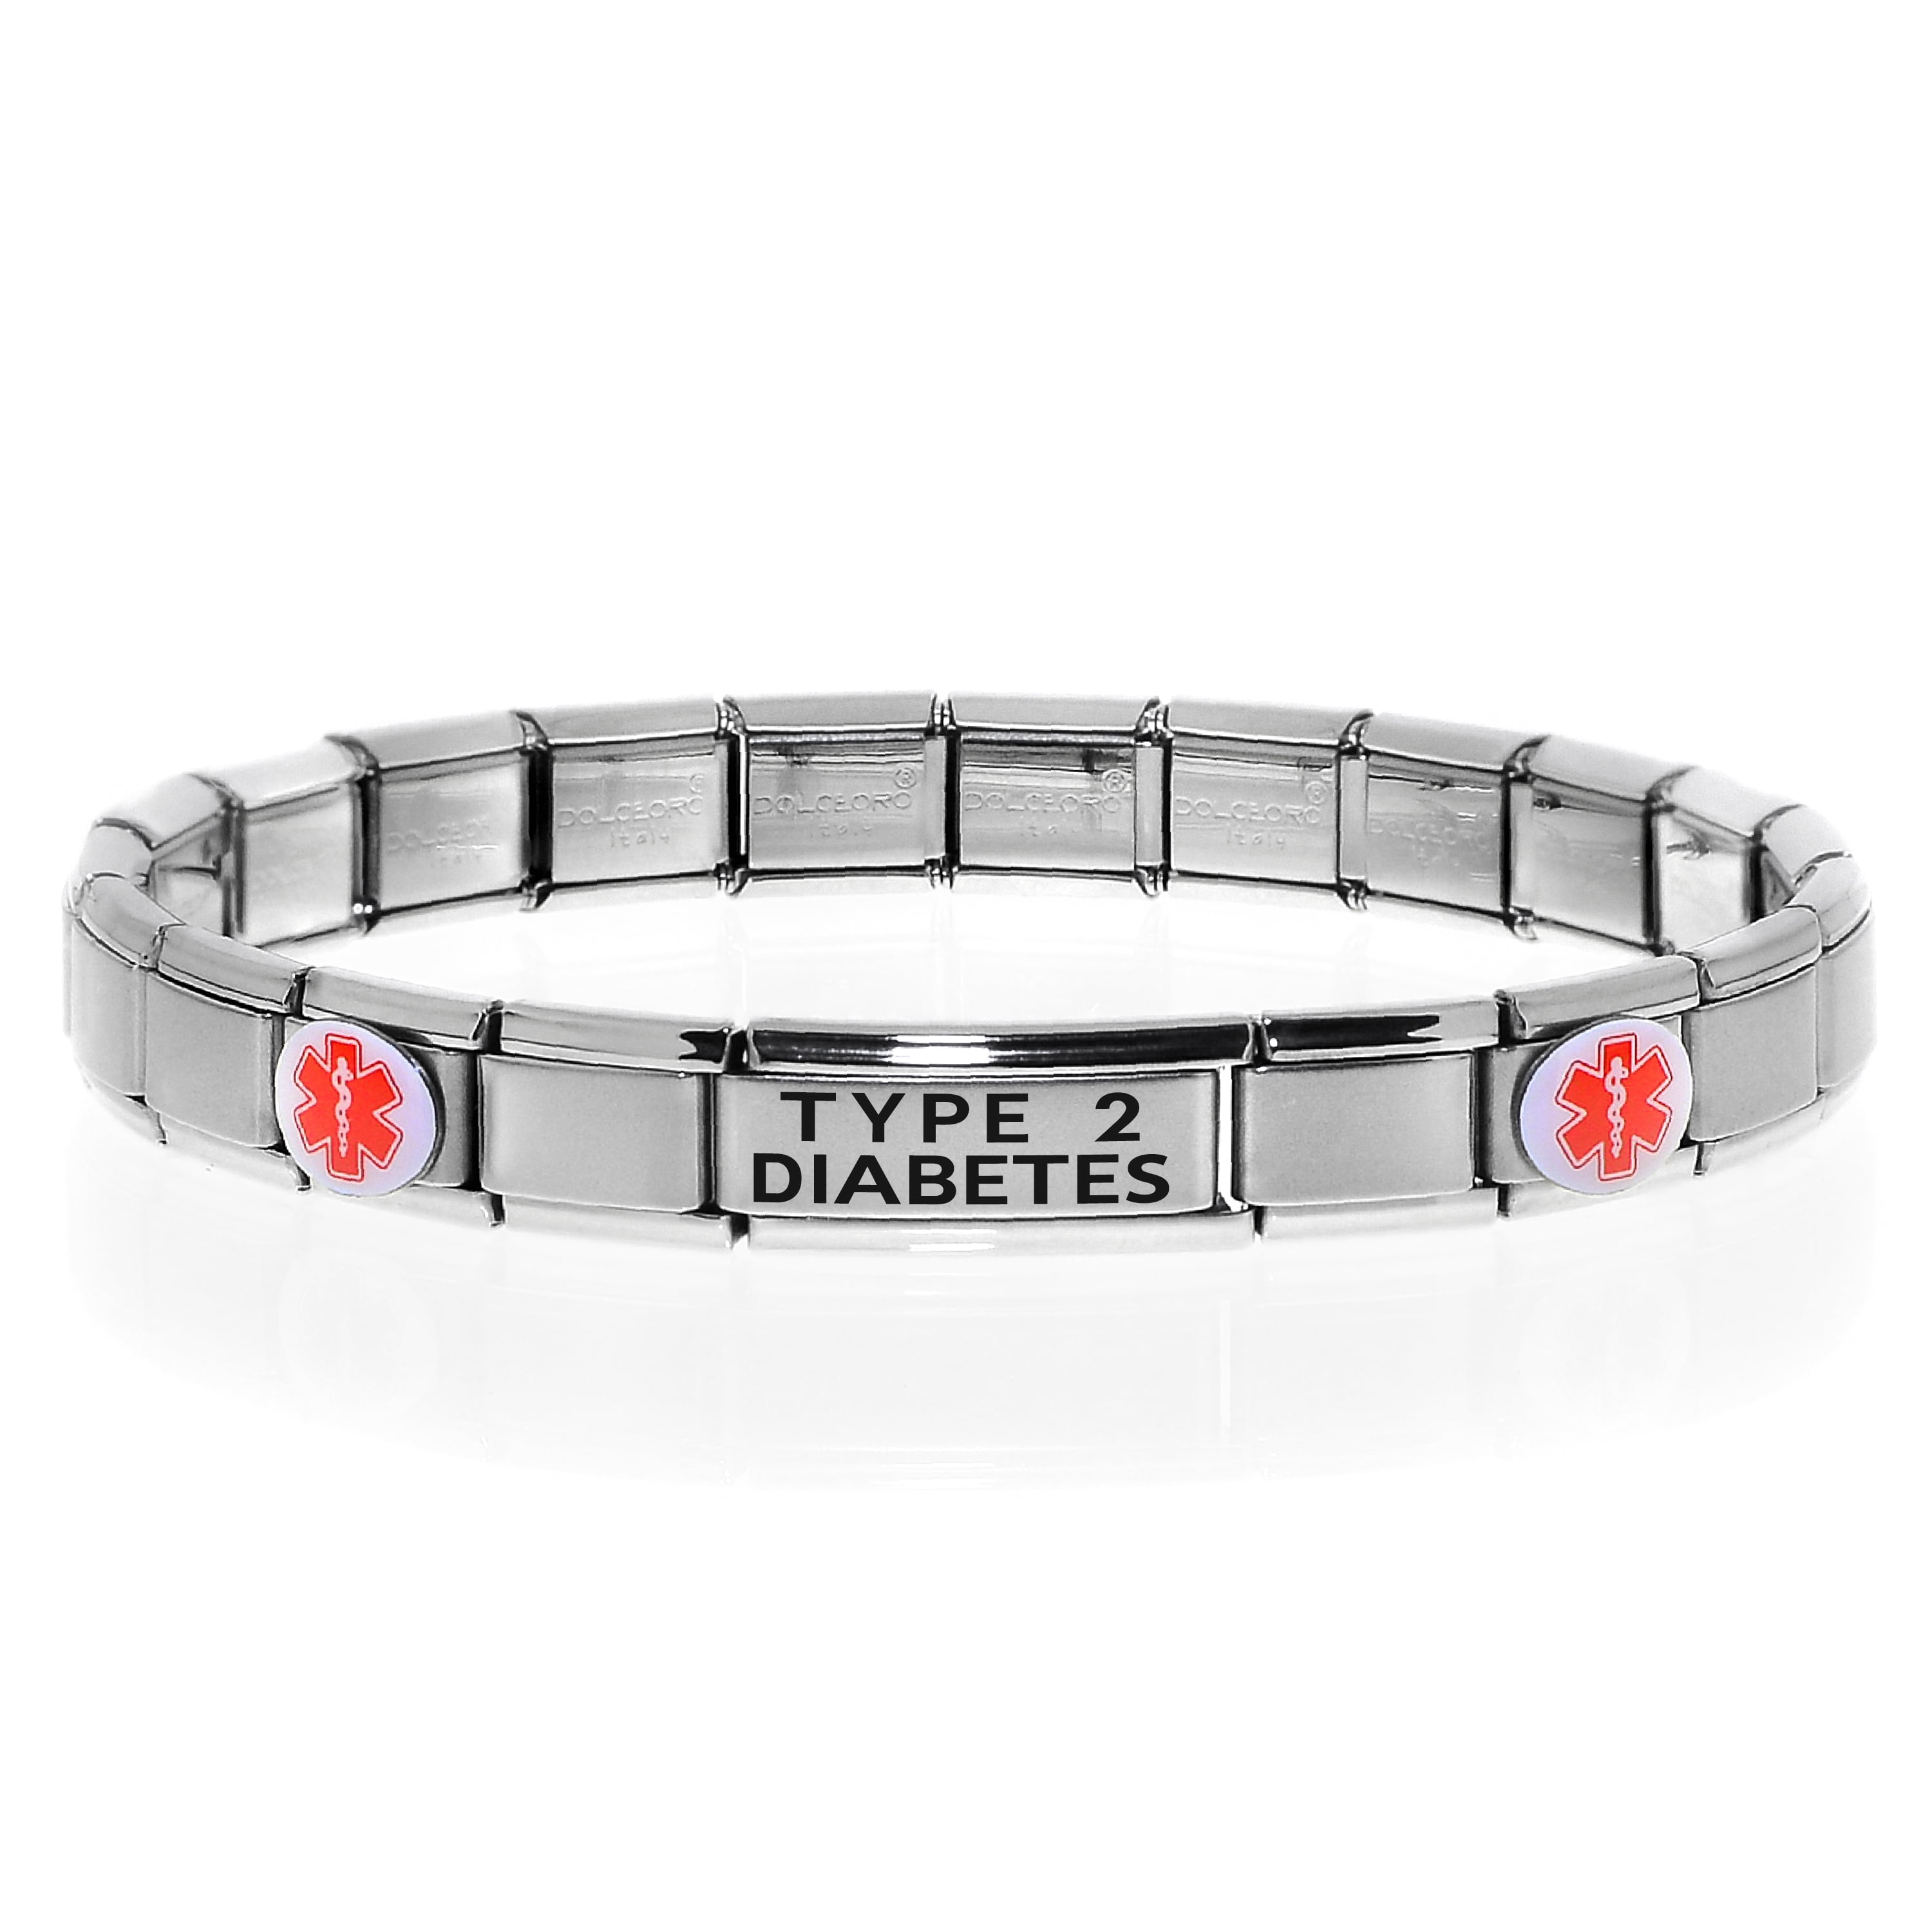 Diabetic bracelet huge sale medical bracelet Diabetes Bracelet alerting